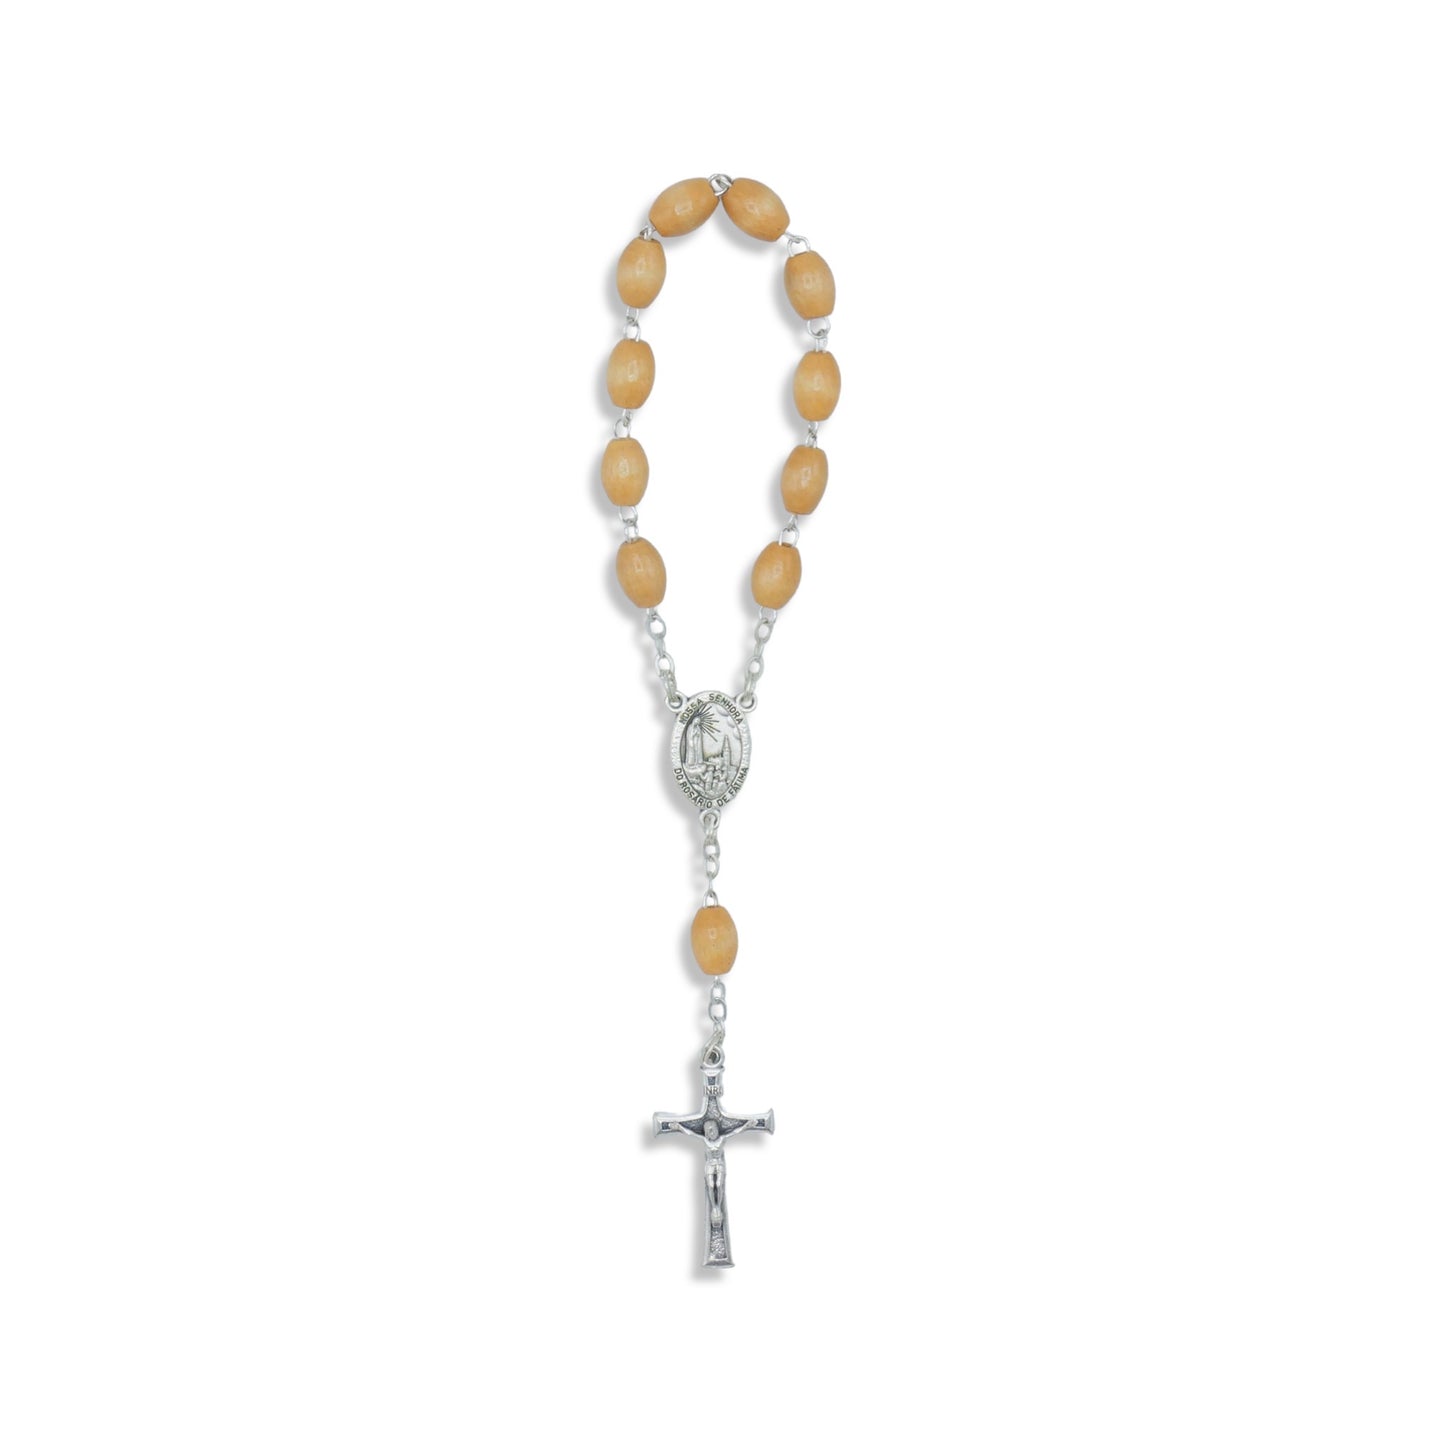 Hickory Wood Colored Fatima Decade Rosary